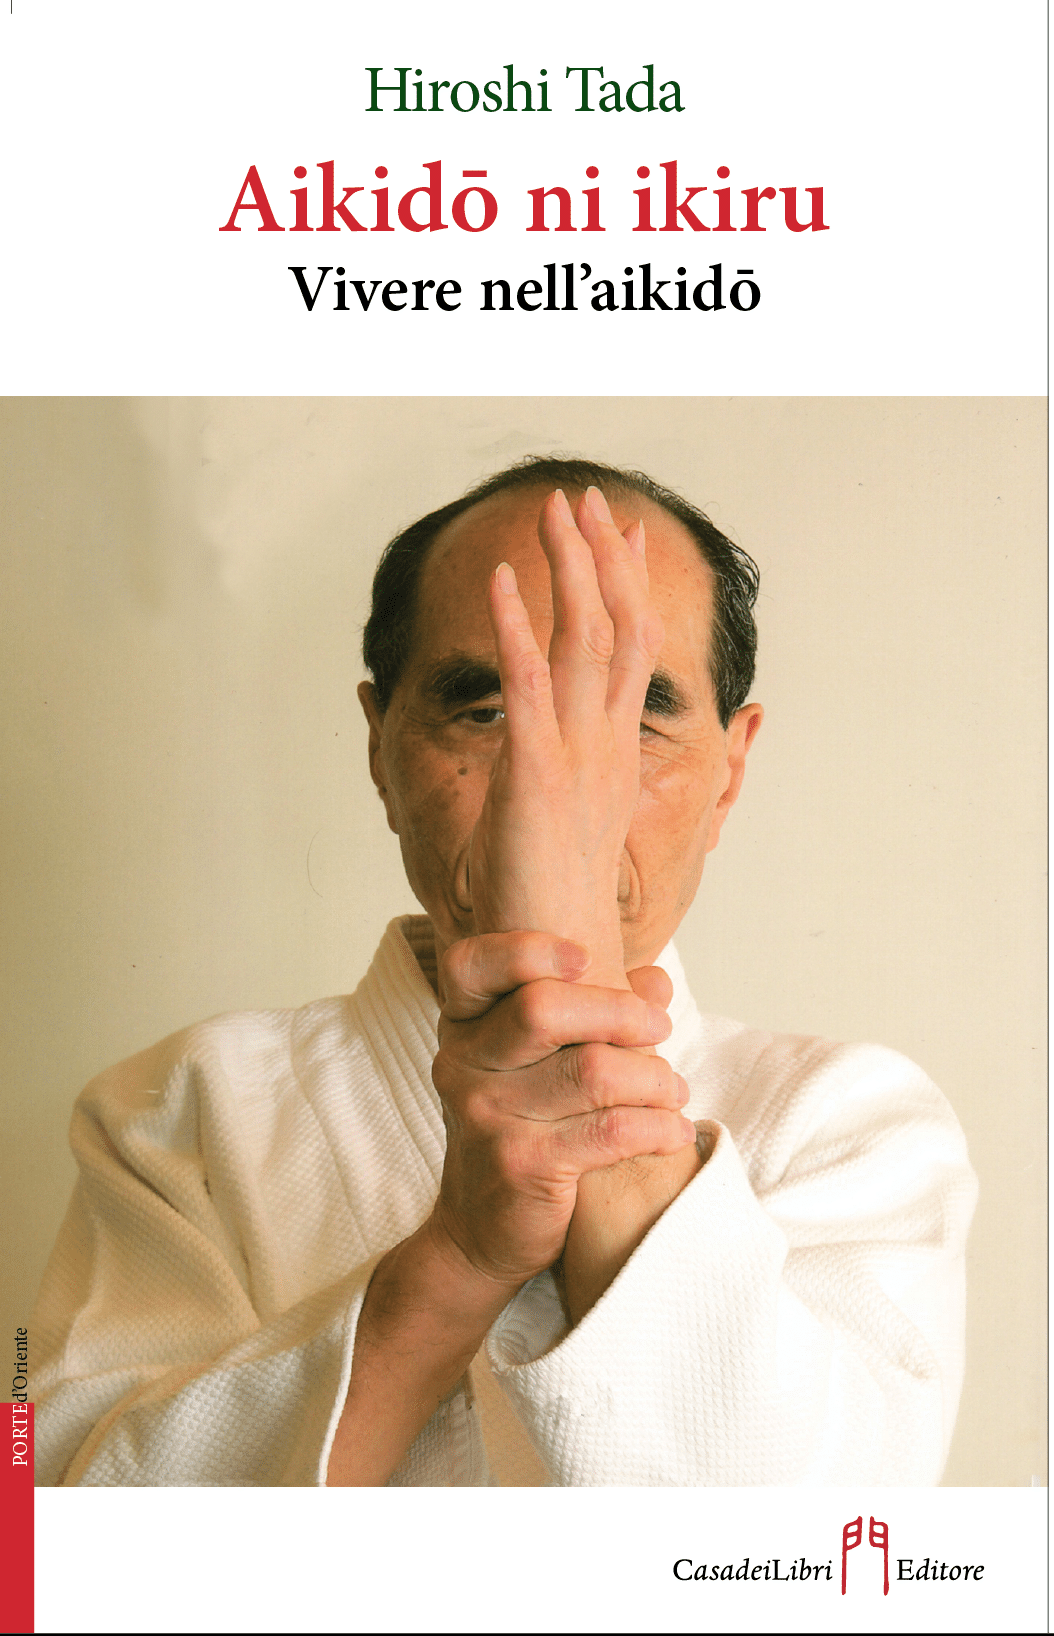 Vivere nell'aikido di Hiroshi Tada (CasadeiLibri)